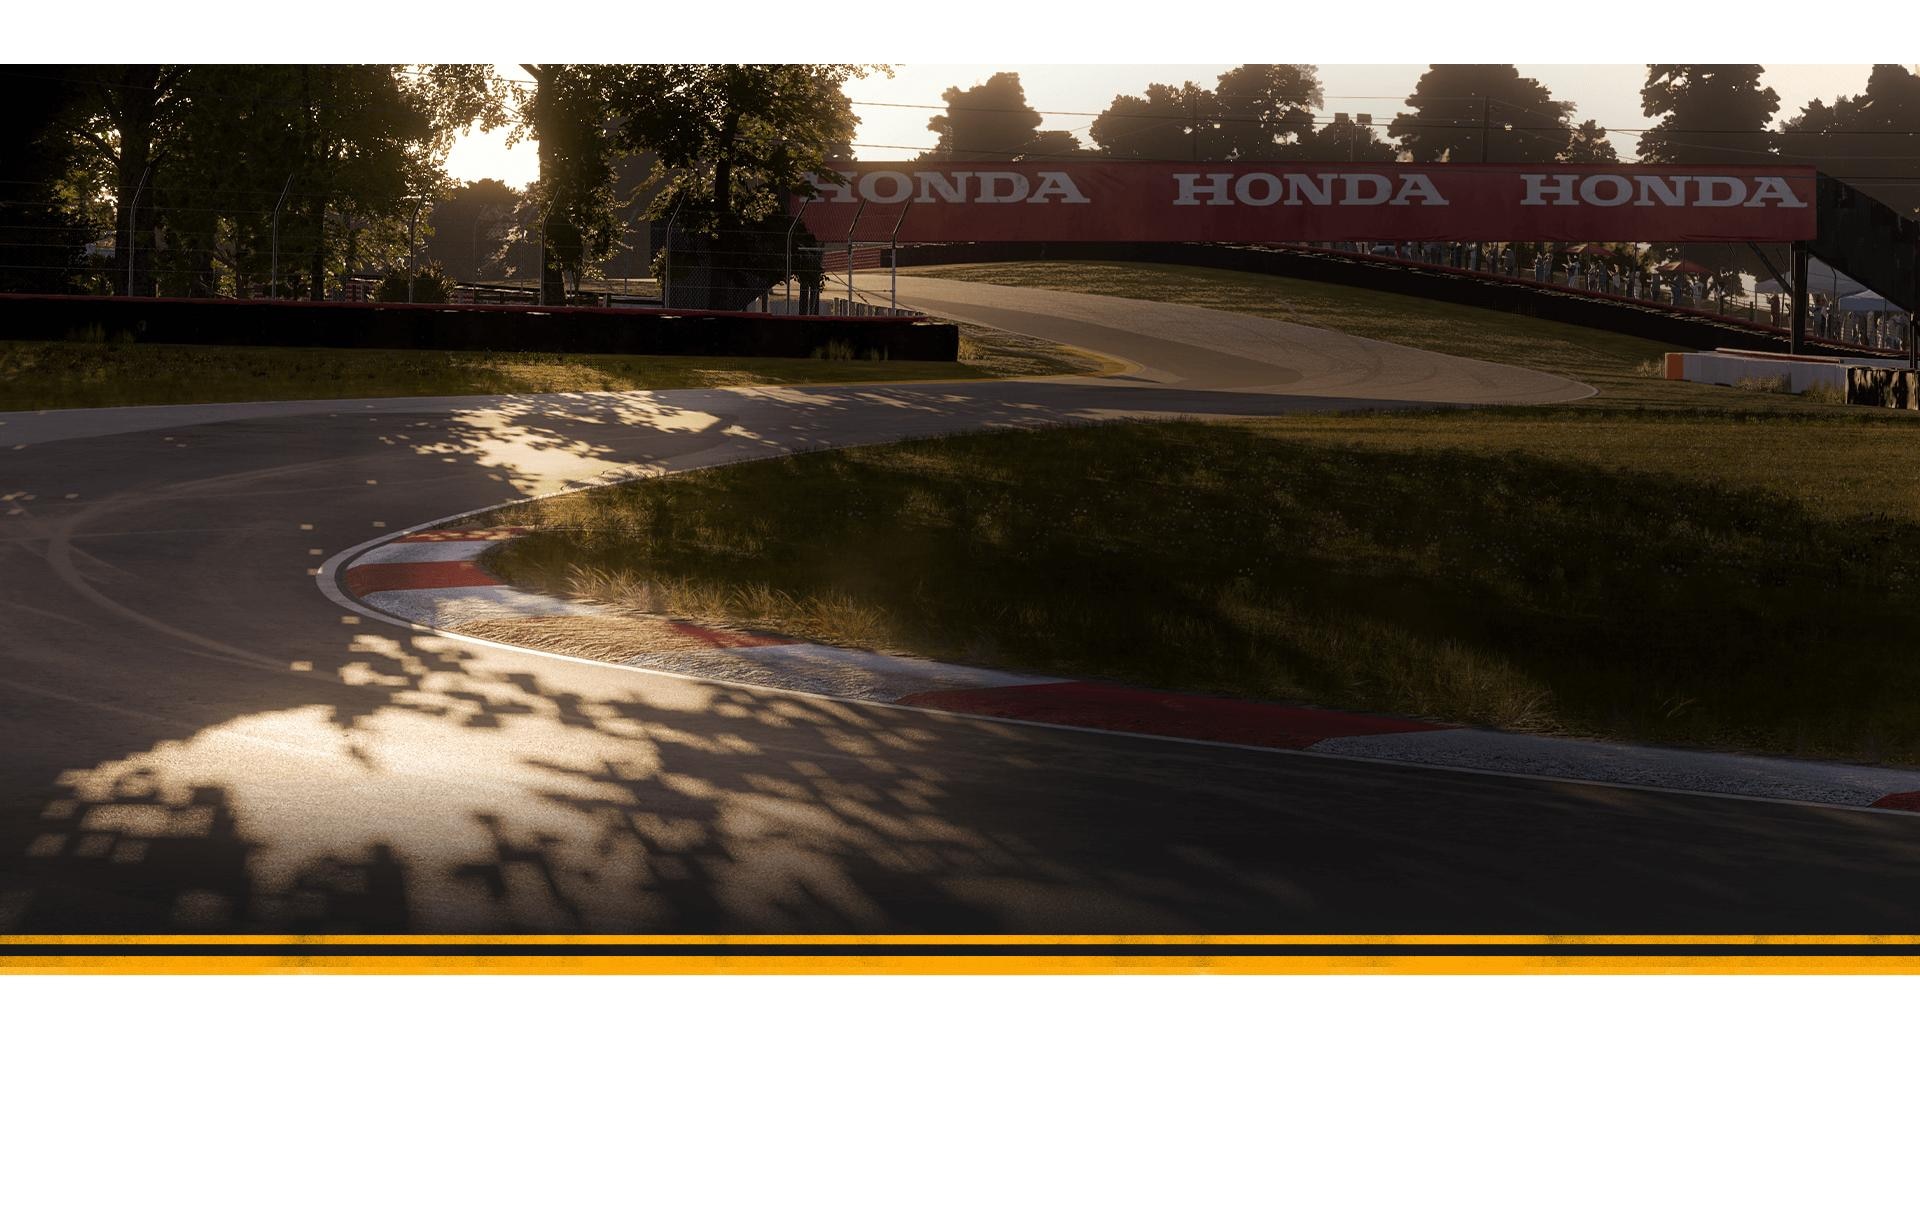 Microsoft Spielesoftware »Forza Motorsport«, Xbox Series X